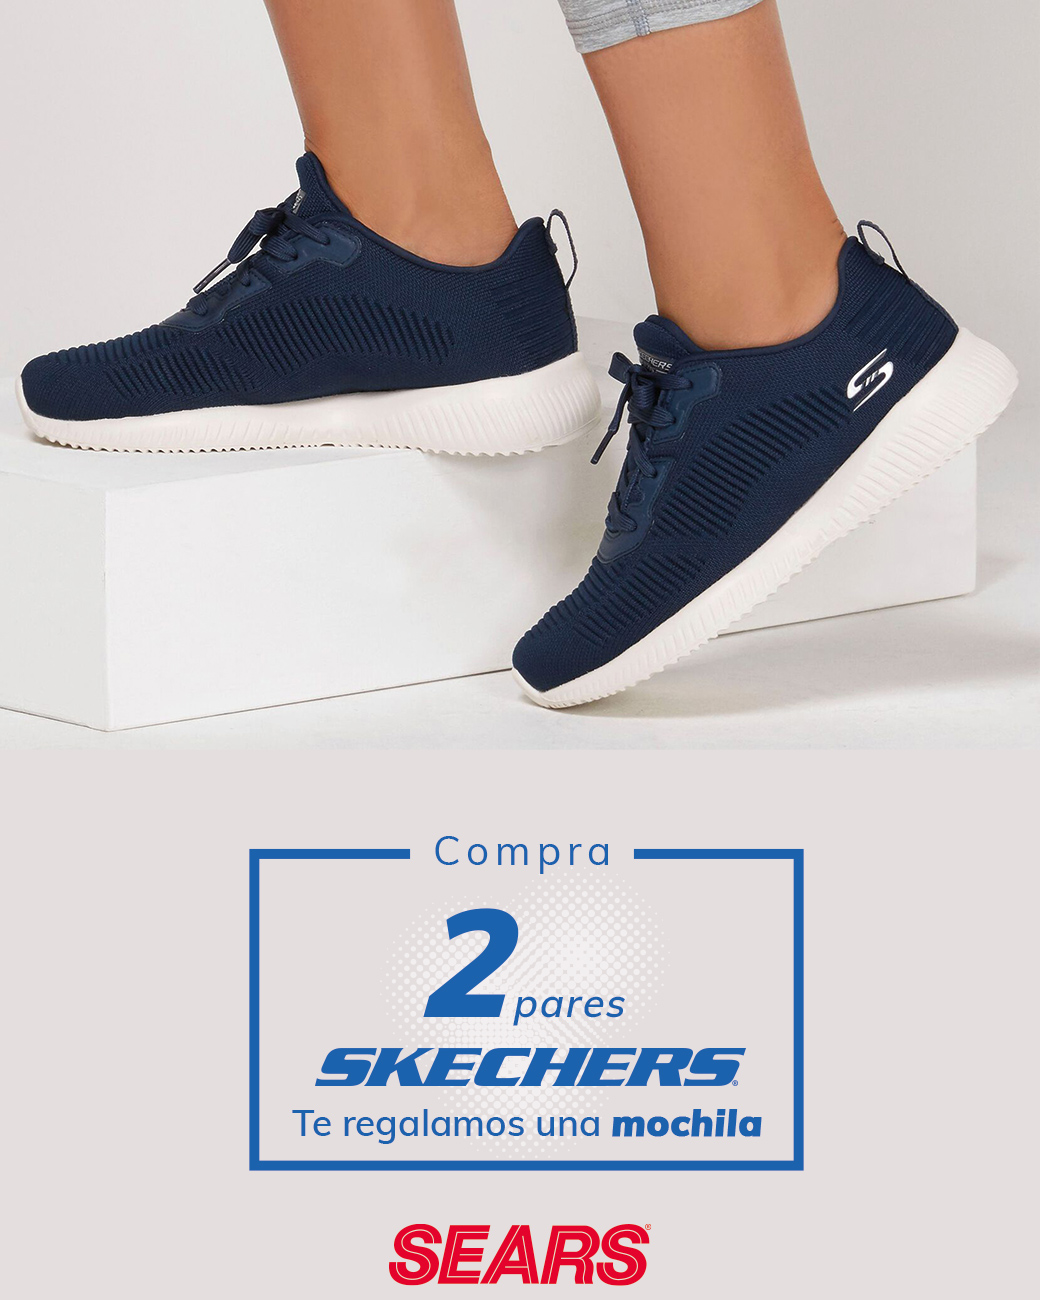 Cazaofertas on Twitter: "En Sears compra 2 pares de tenis Skechers y llévate una mochila de regalo https://t.co/1QPs9fqJua #Oferta #promocion # México #promociones #descuentos #Cazaofertas https://t.co/Tq7iRKUnL7" / Twitter